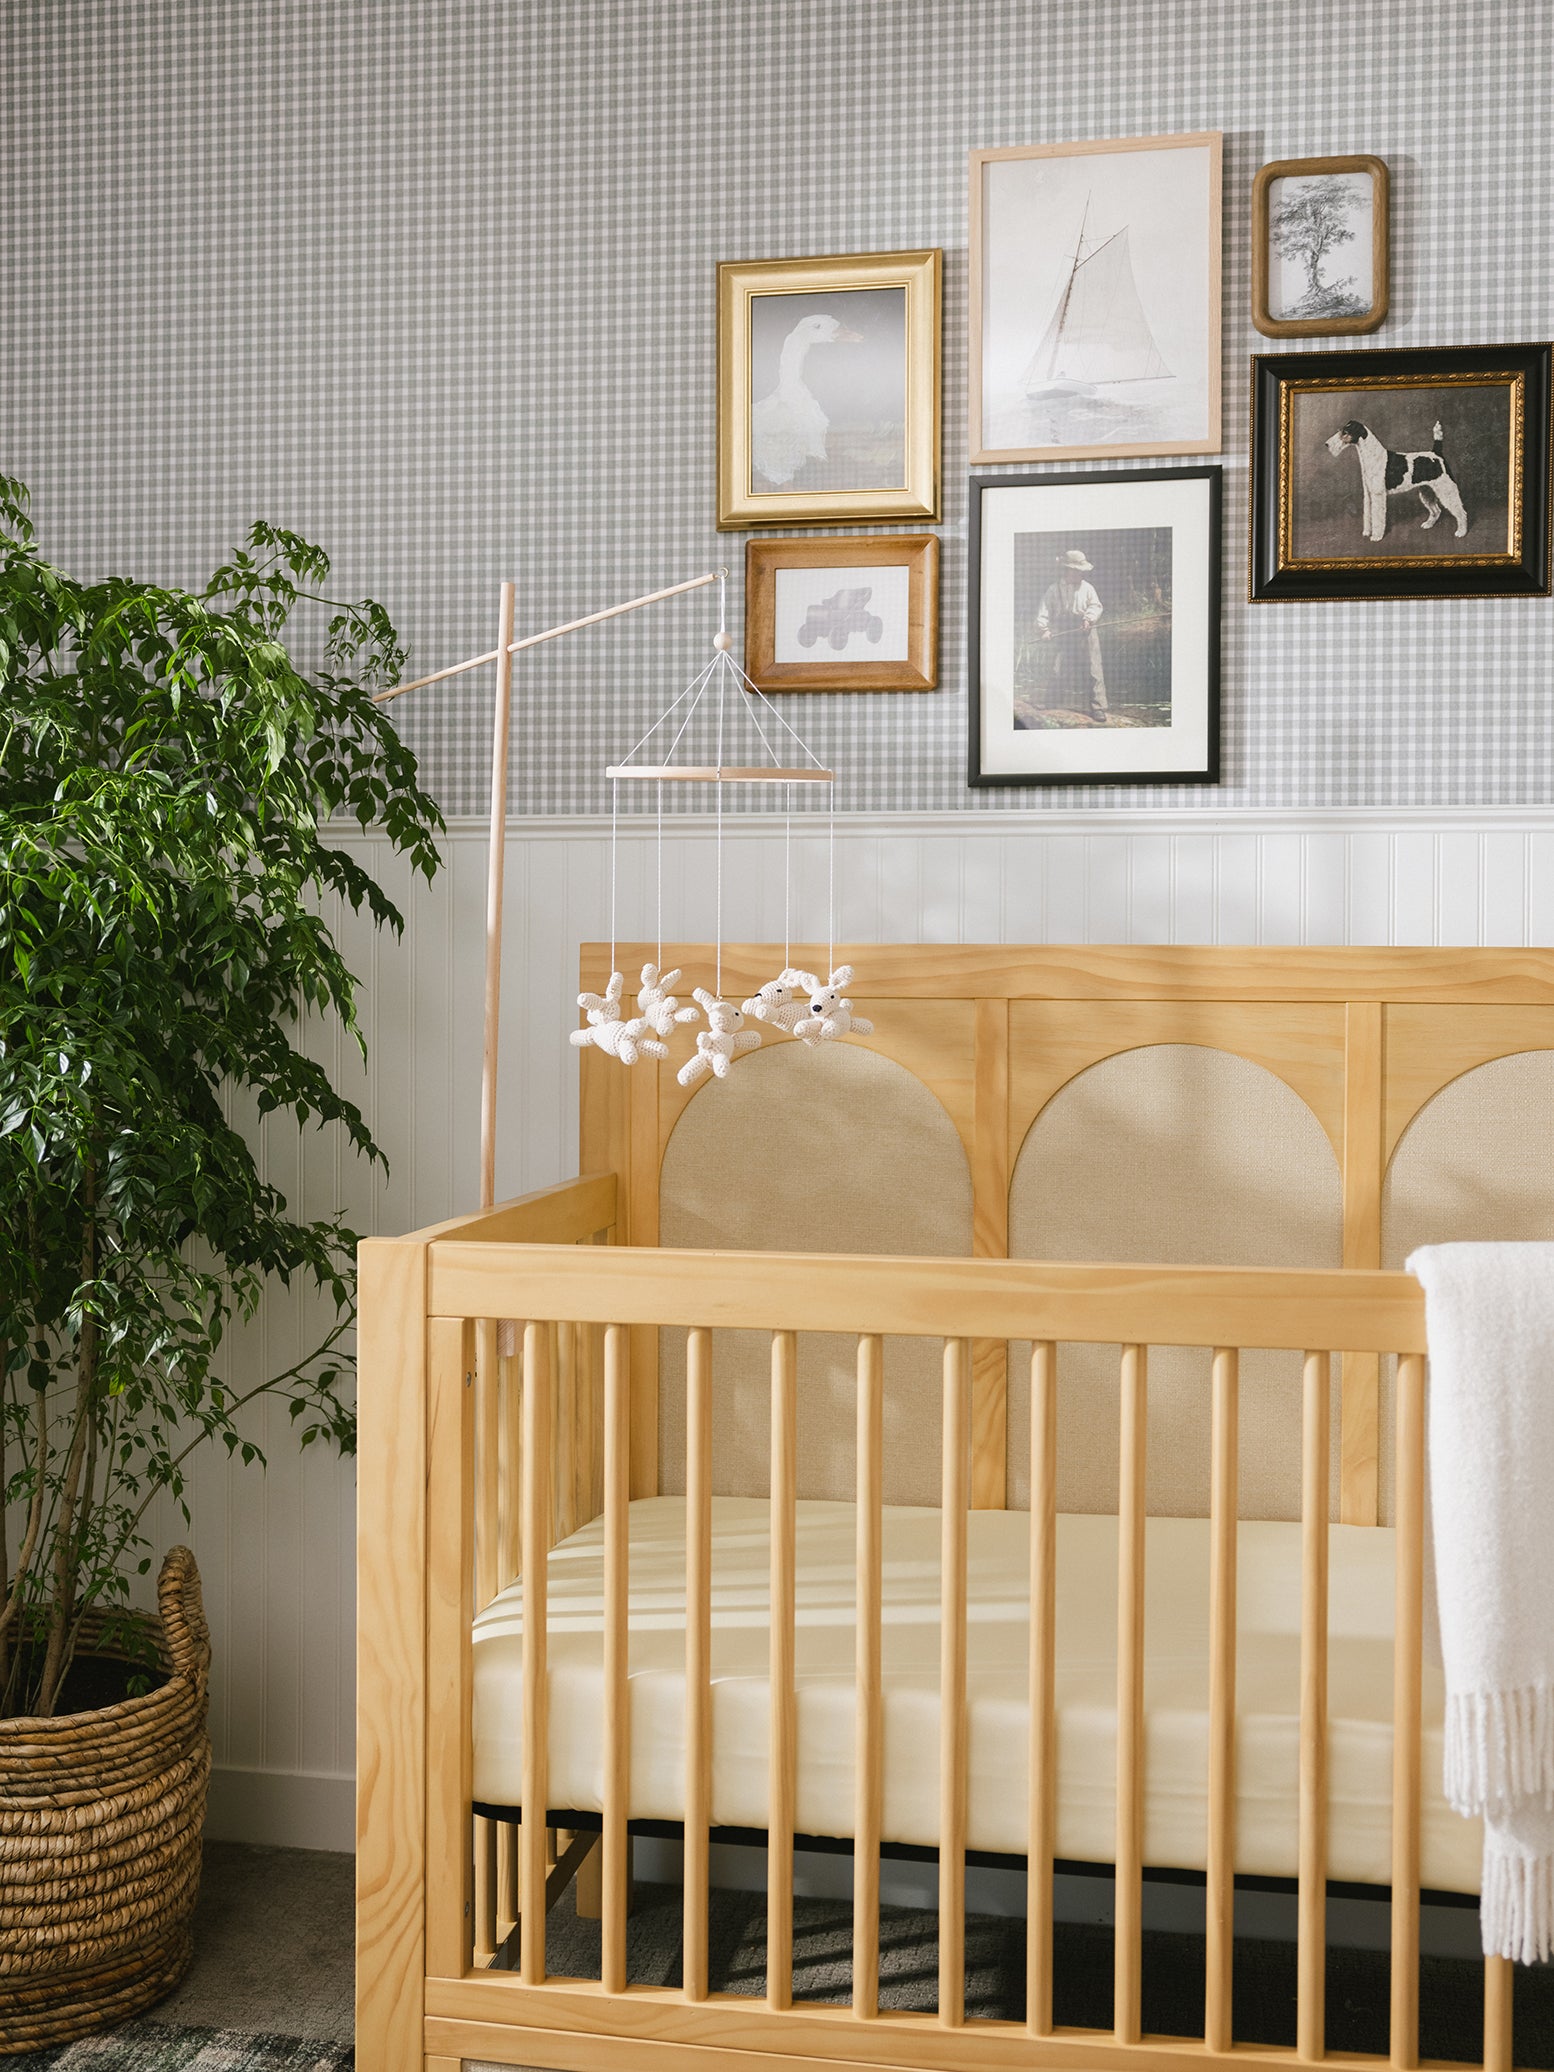 Lemonade Bamboo Crib Sheet placed on a baby mattress in a baby crib. 